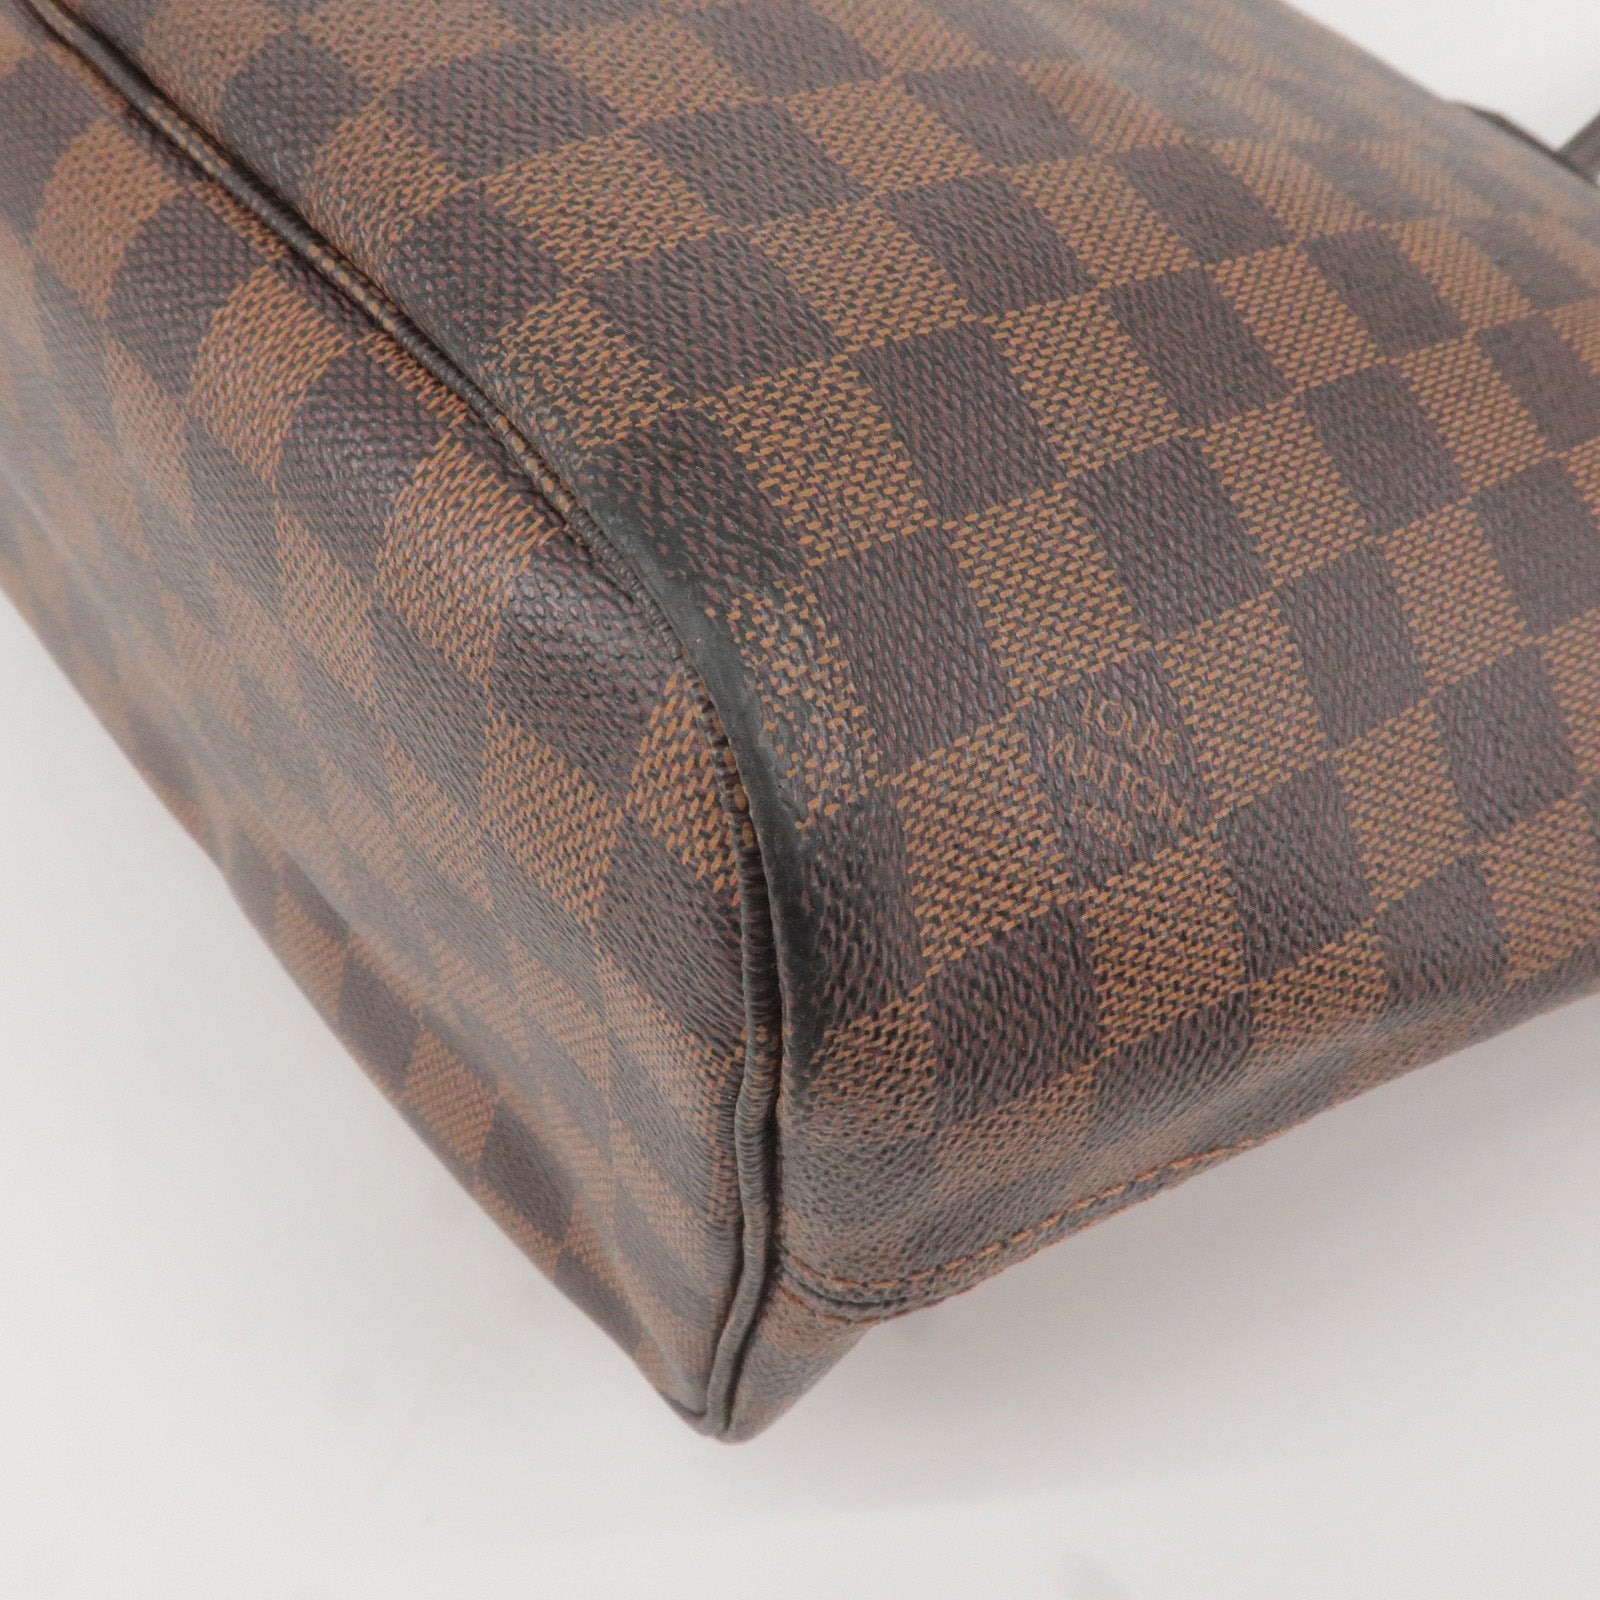 Louis Vuitton Damier Neverfull MM N41358 Tote Bag